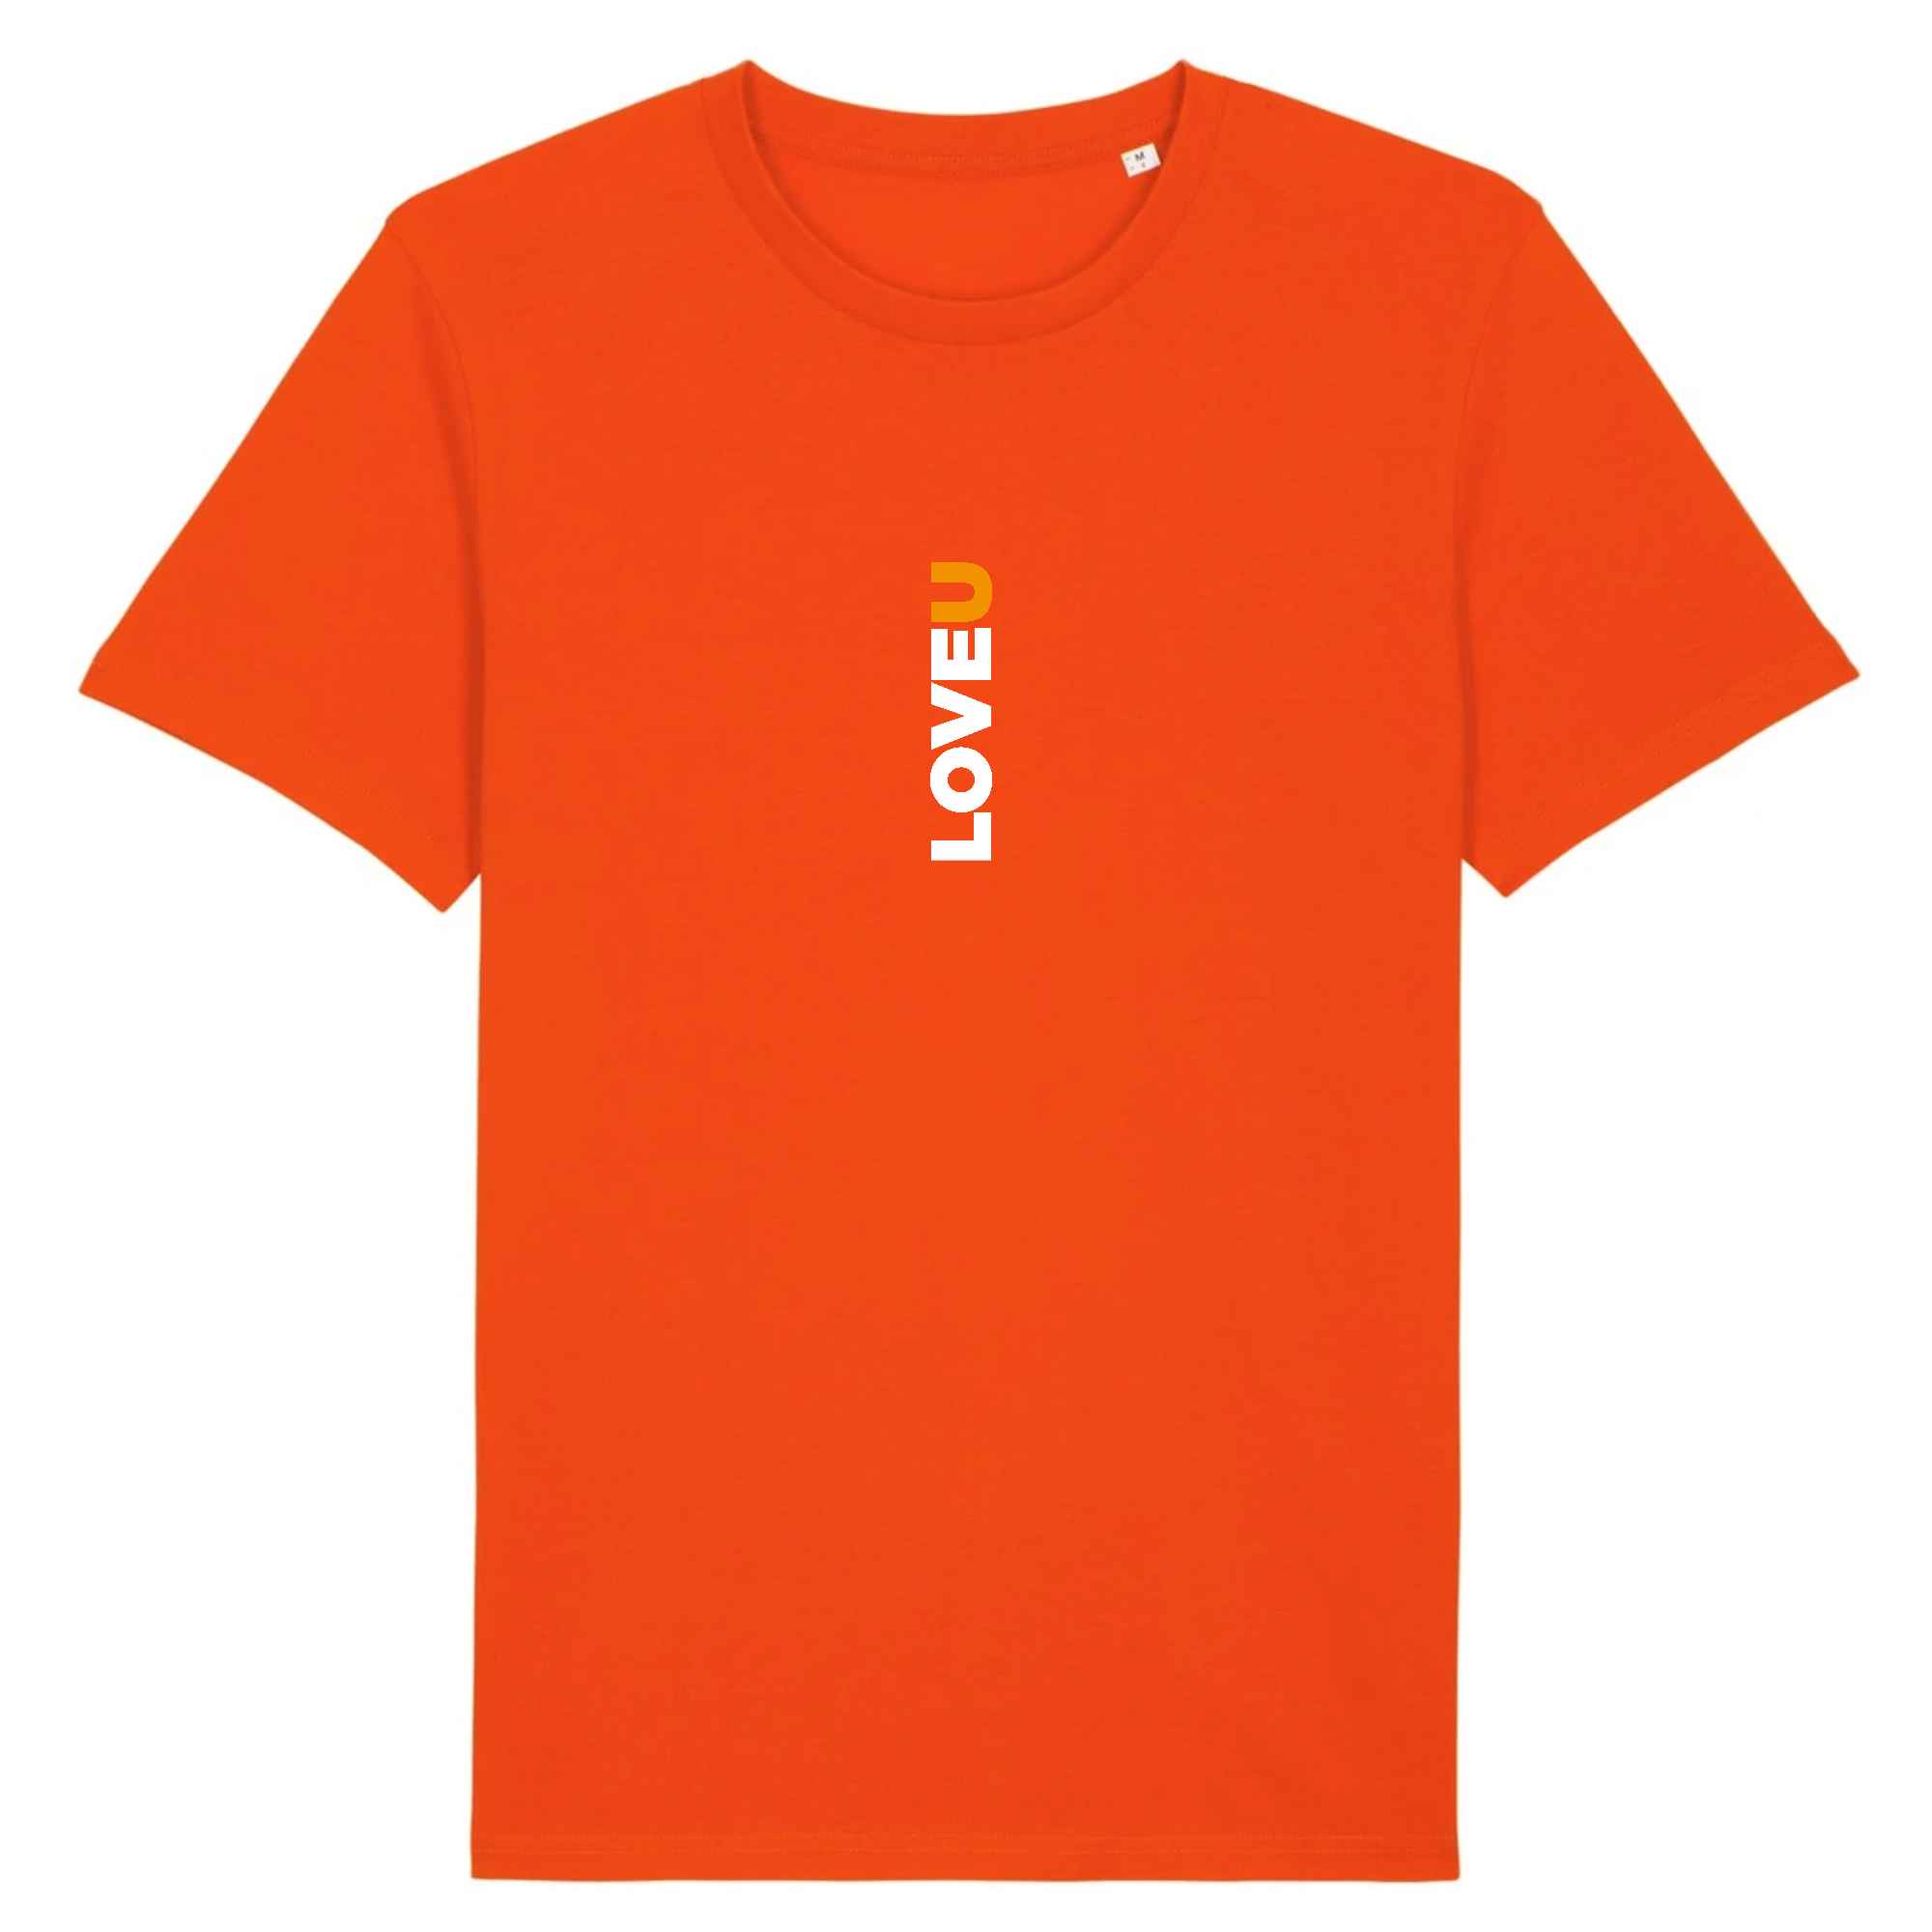 T-shirt unisexe orange LOVE YOU - Collection Saint-valentin